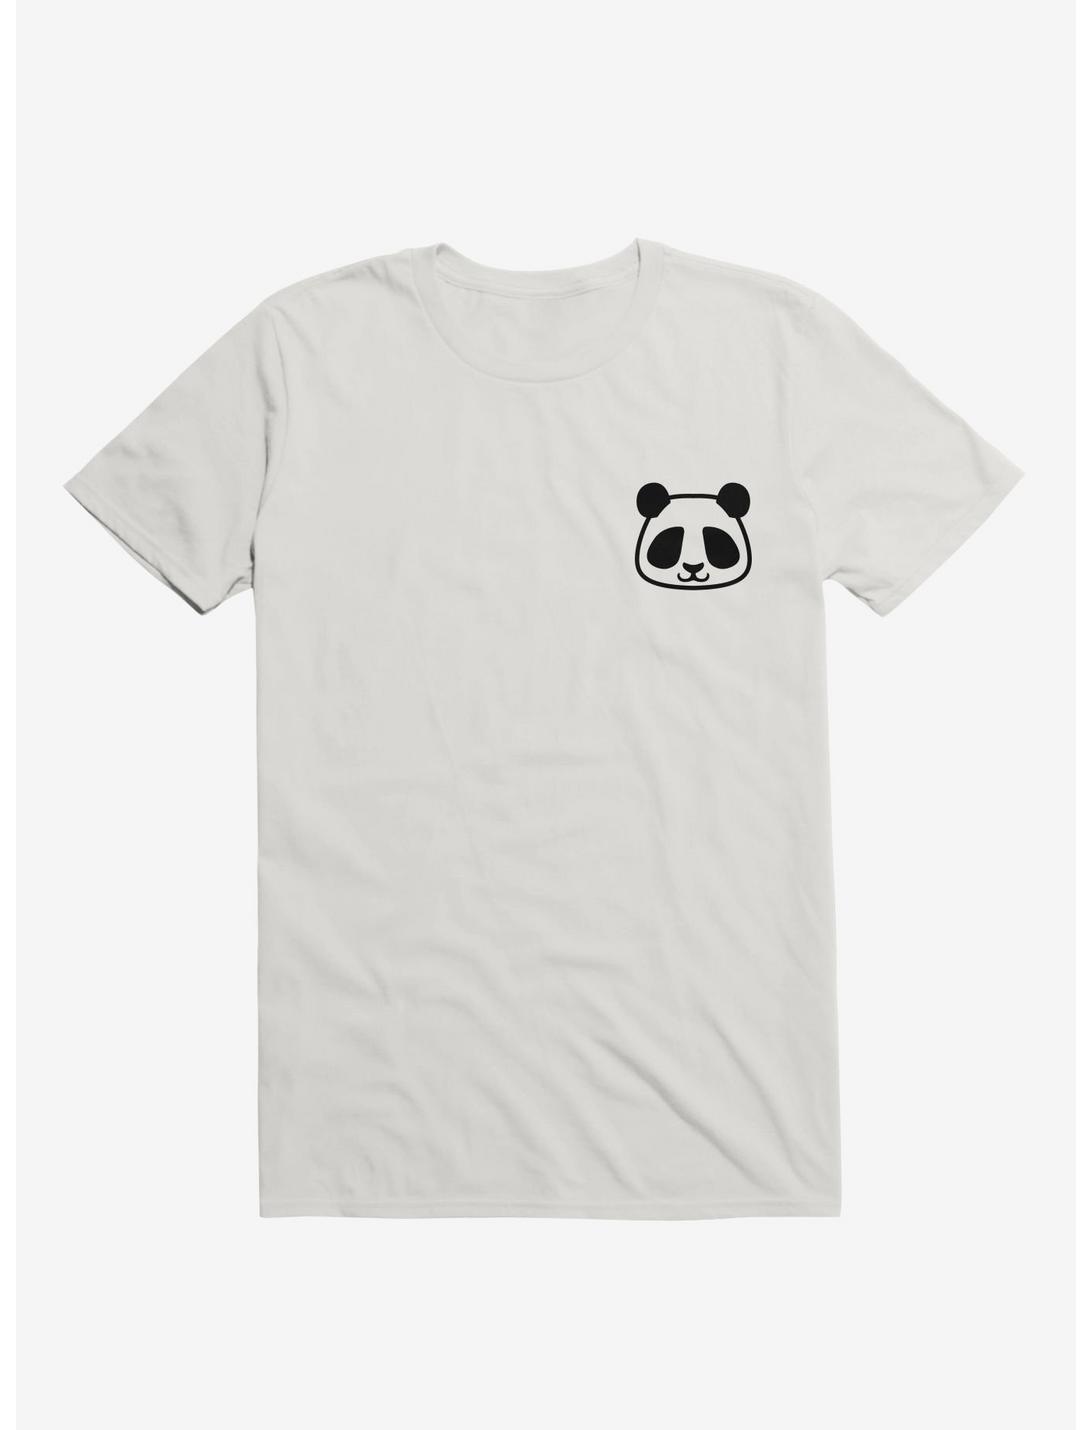 Panda Black and White Minimalist Pictogram T-Shirt, WHITE, hi-res